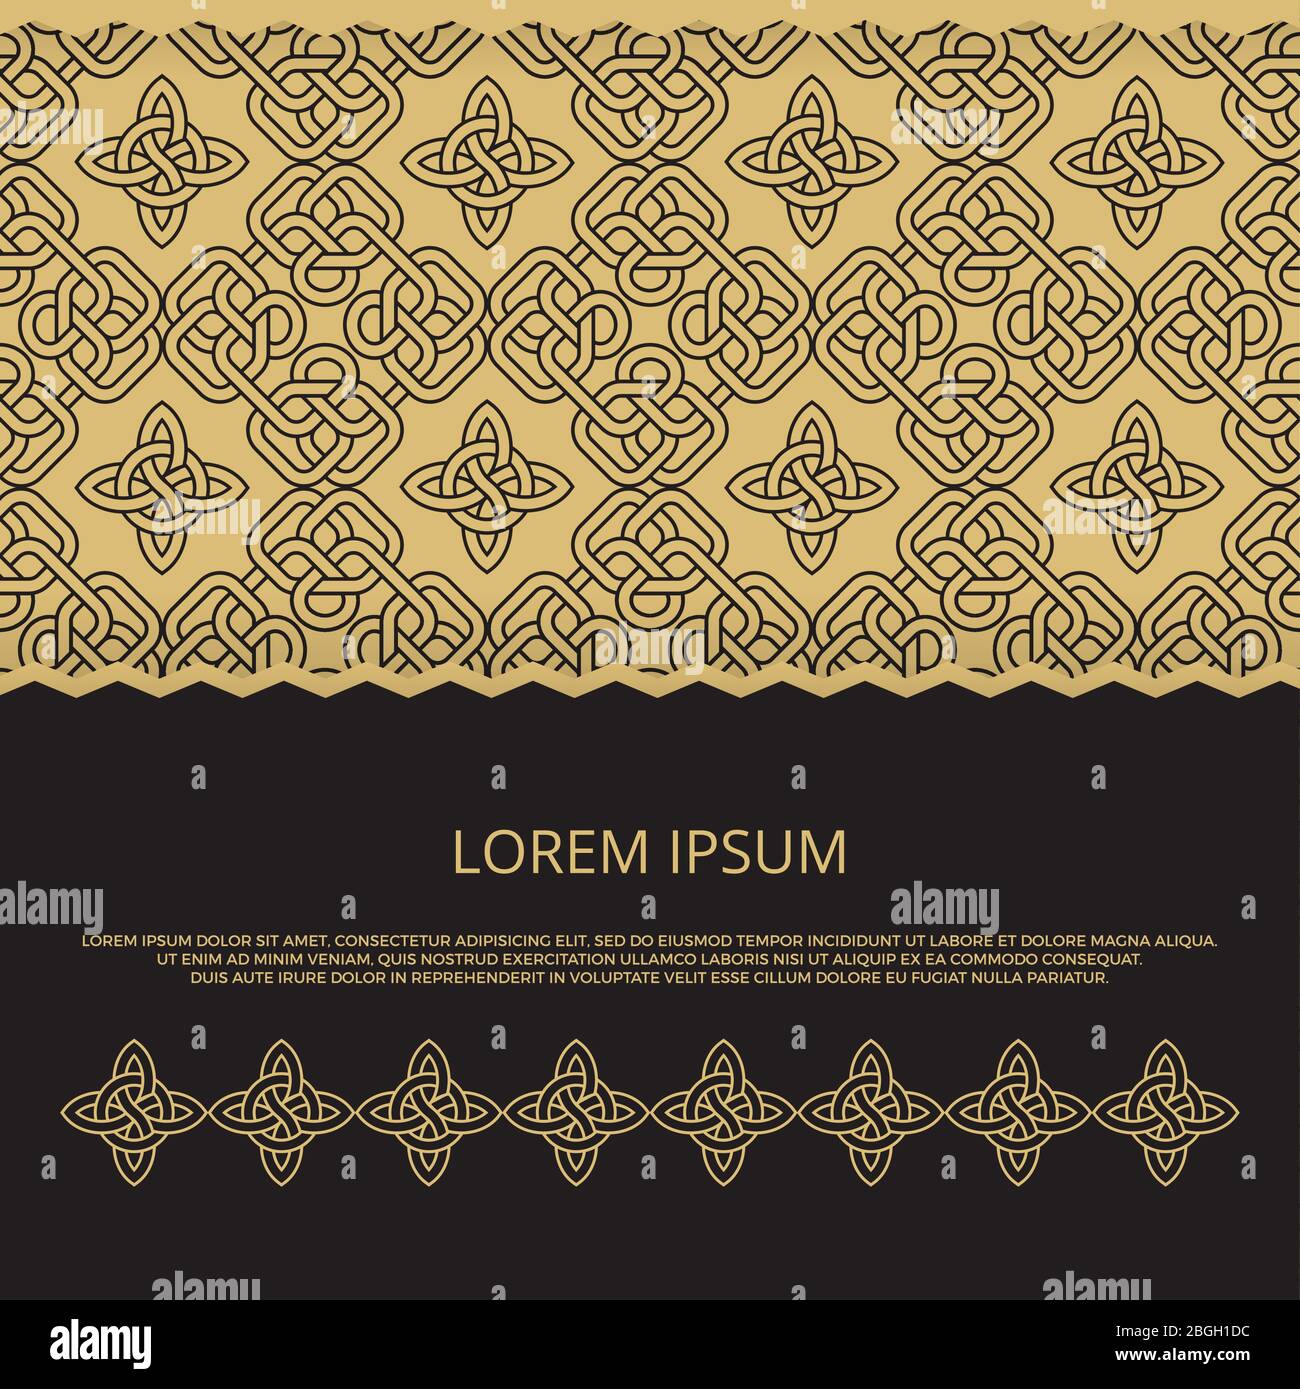 Golden celtic knots banner template. Decorative pattern design. Vector illustration Stock Vector